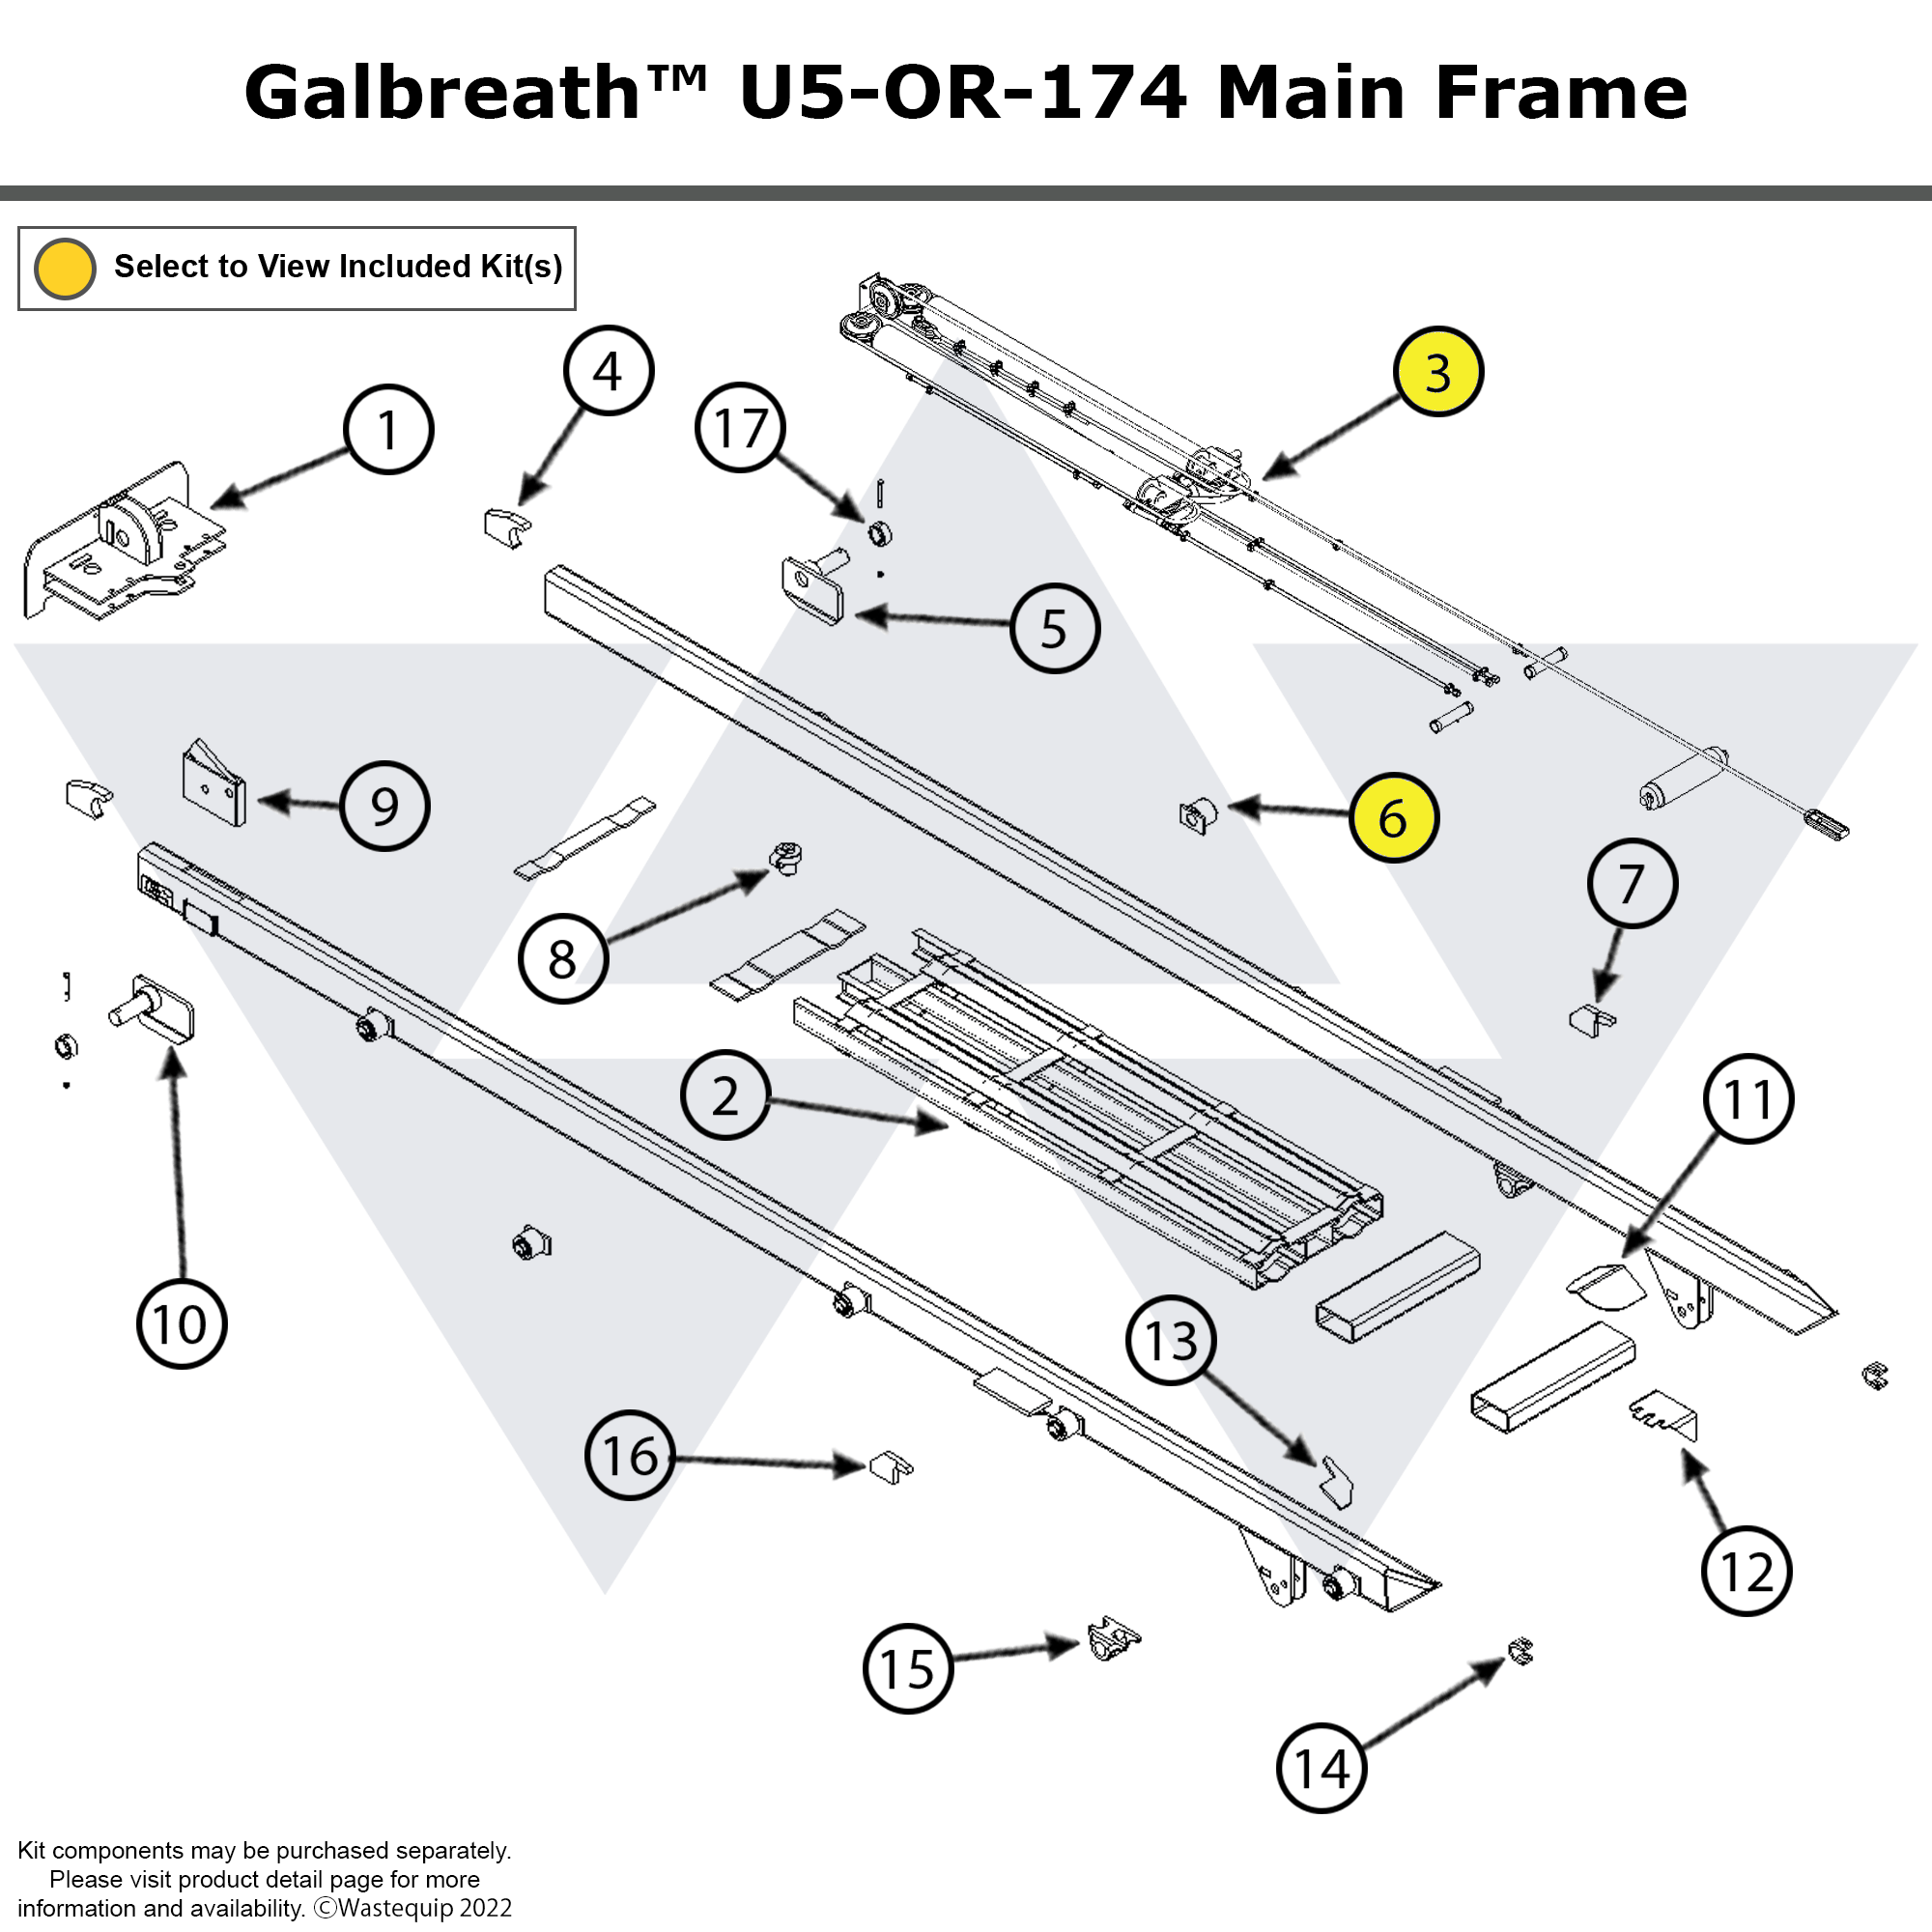 Galbreath™ Hoist U5-OR-174 Main Frame Assembly